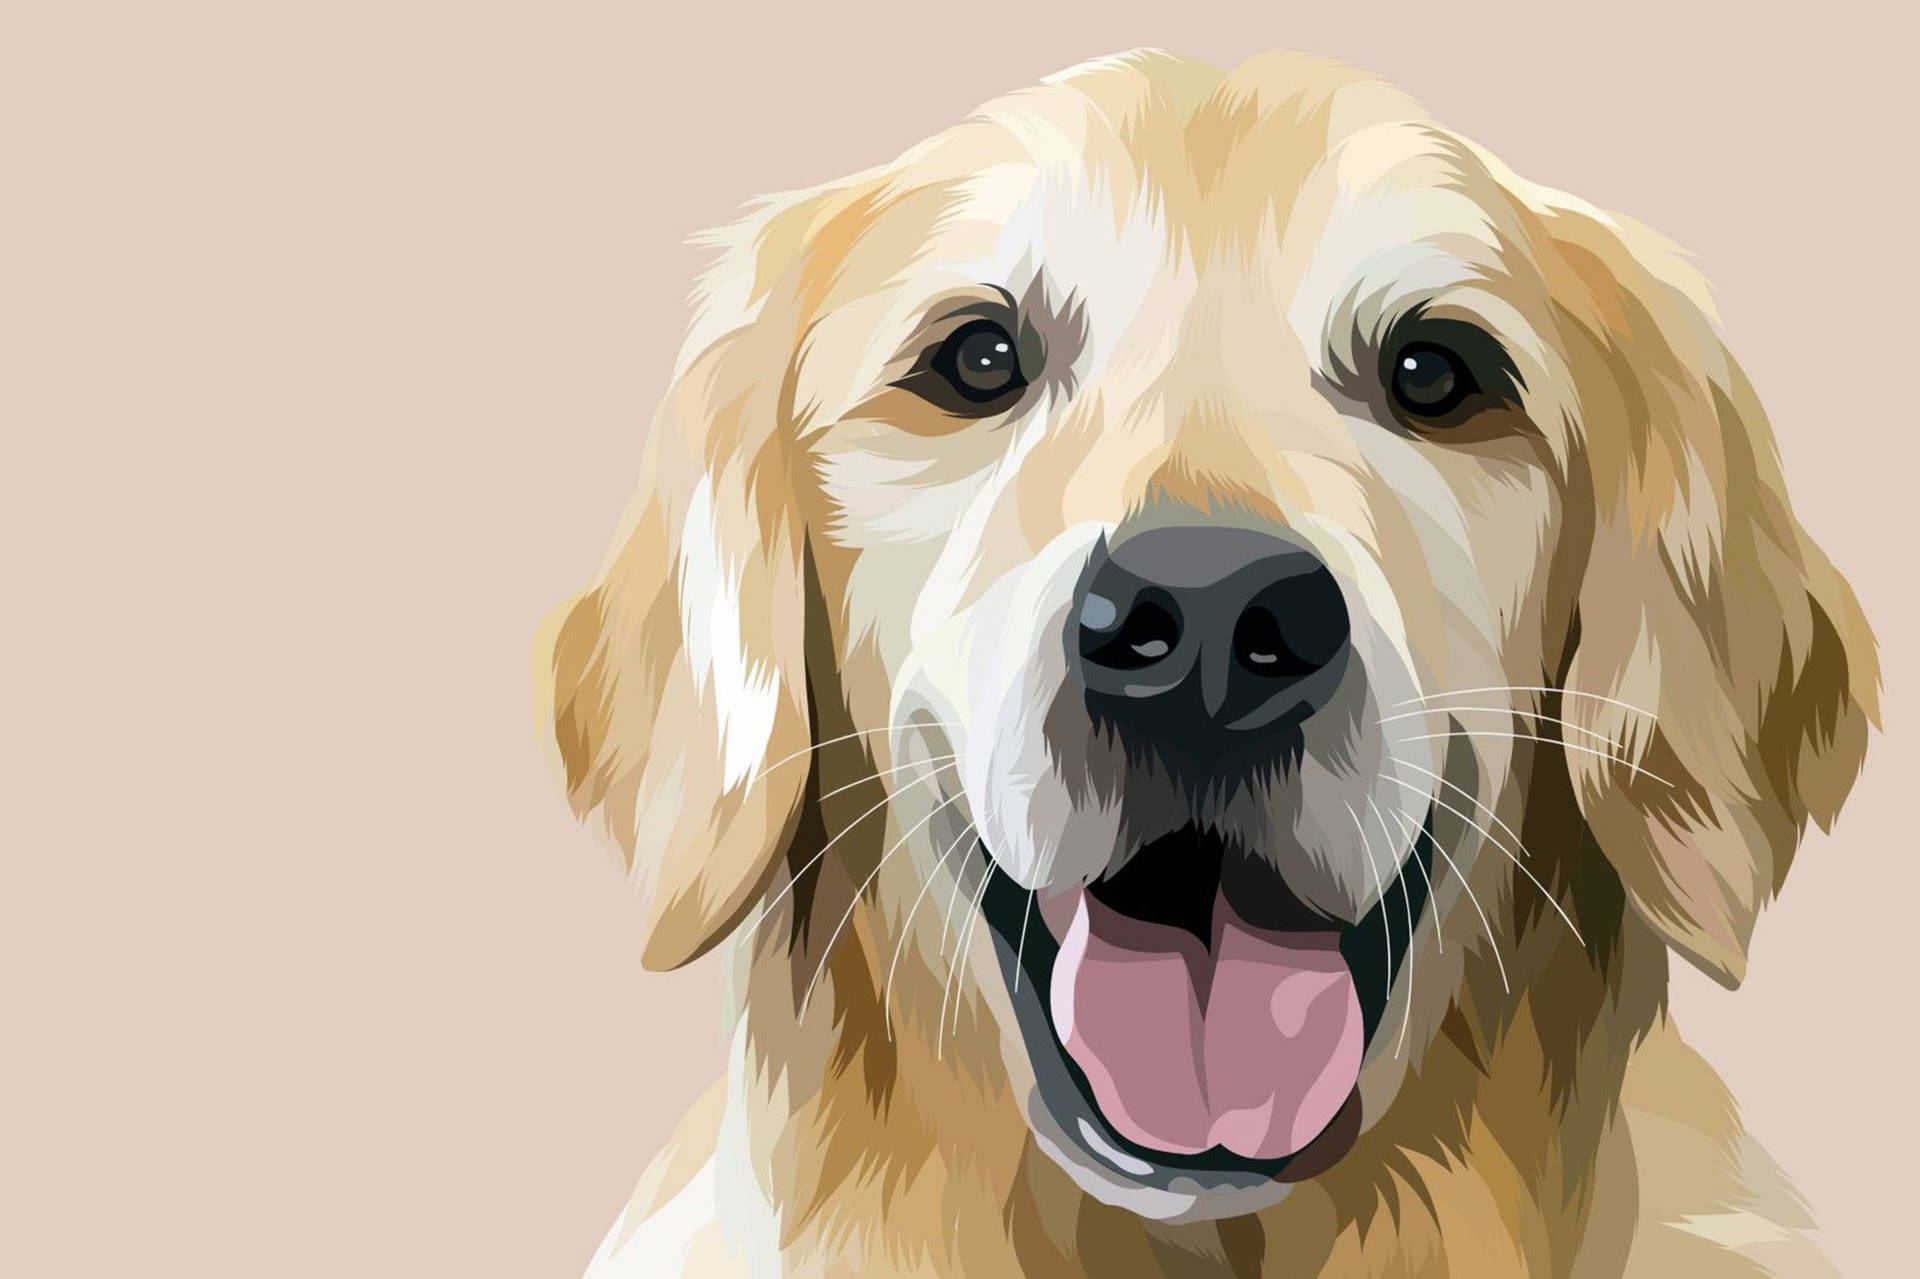 Free Dog Art Wallpaper Downloads, [100+] Dog Art Wallpapers for FREE |  